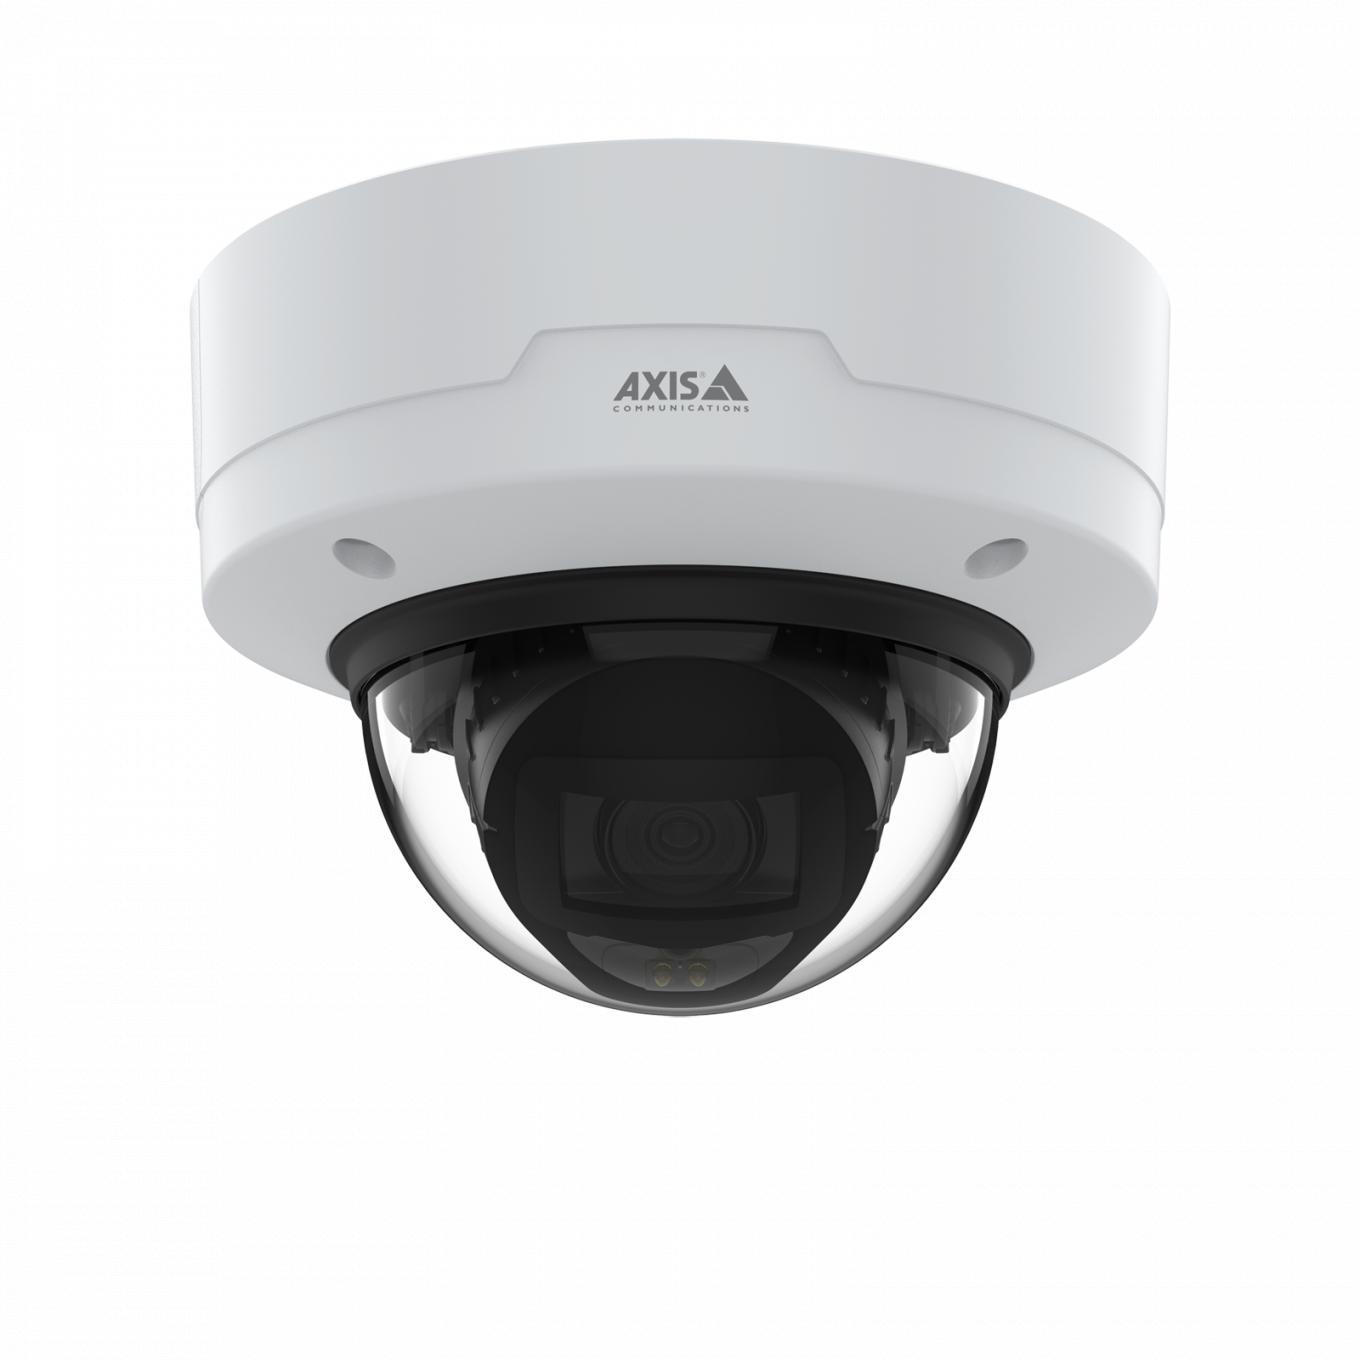 AXIS P3267-LV Dome Camera